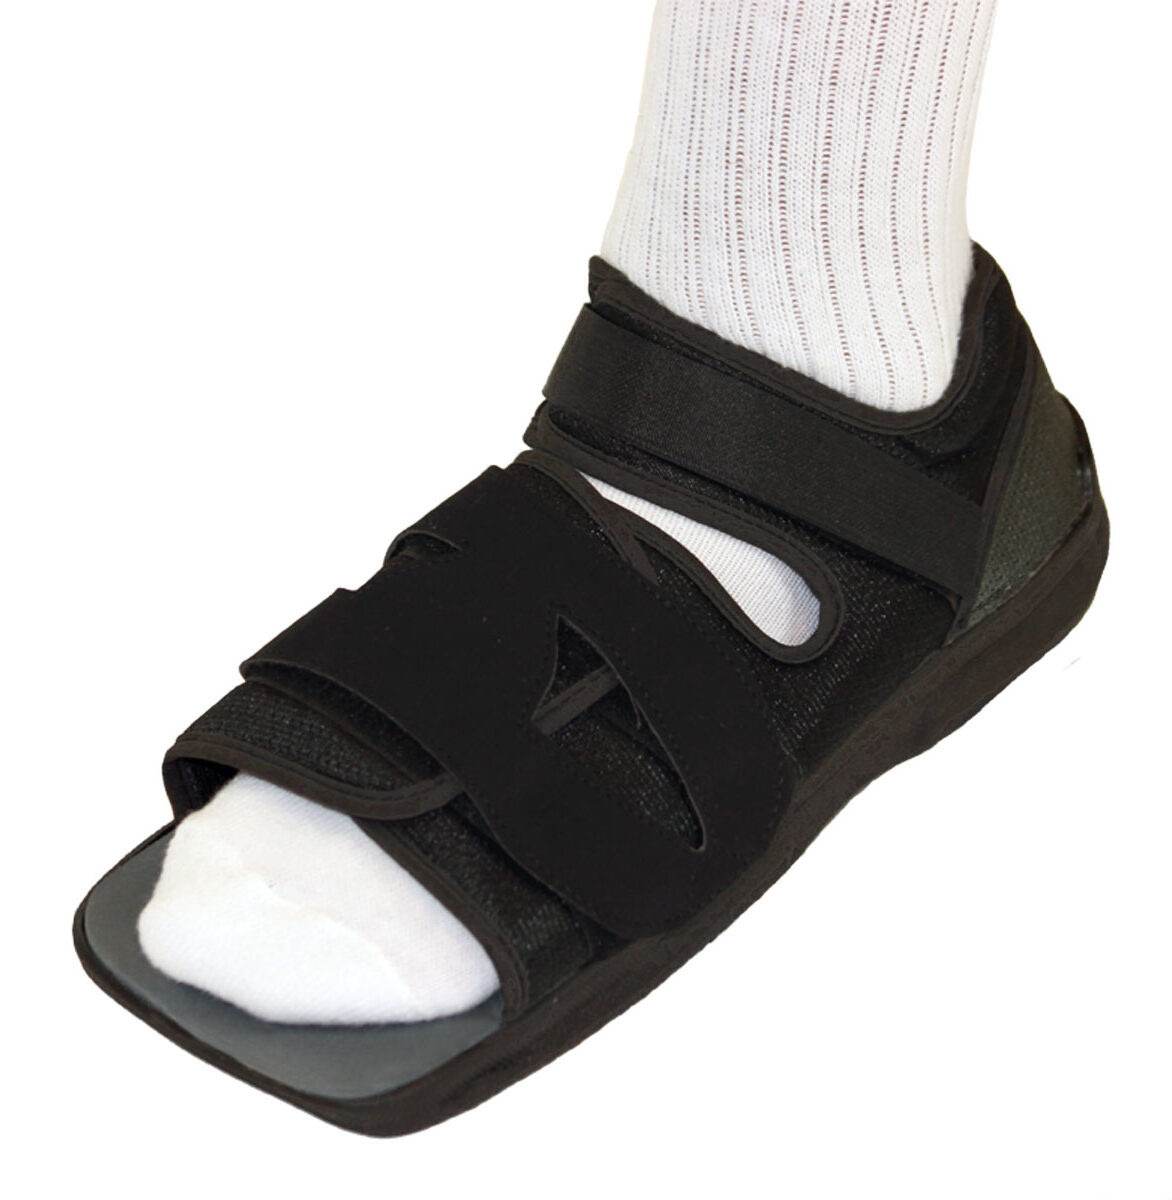 Square Toe Post-op Shoe – Pacific Medical, Inc.